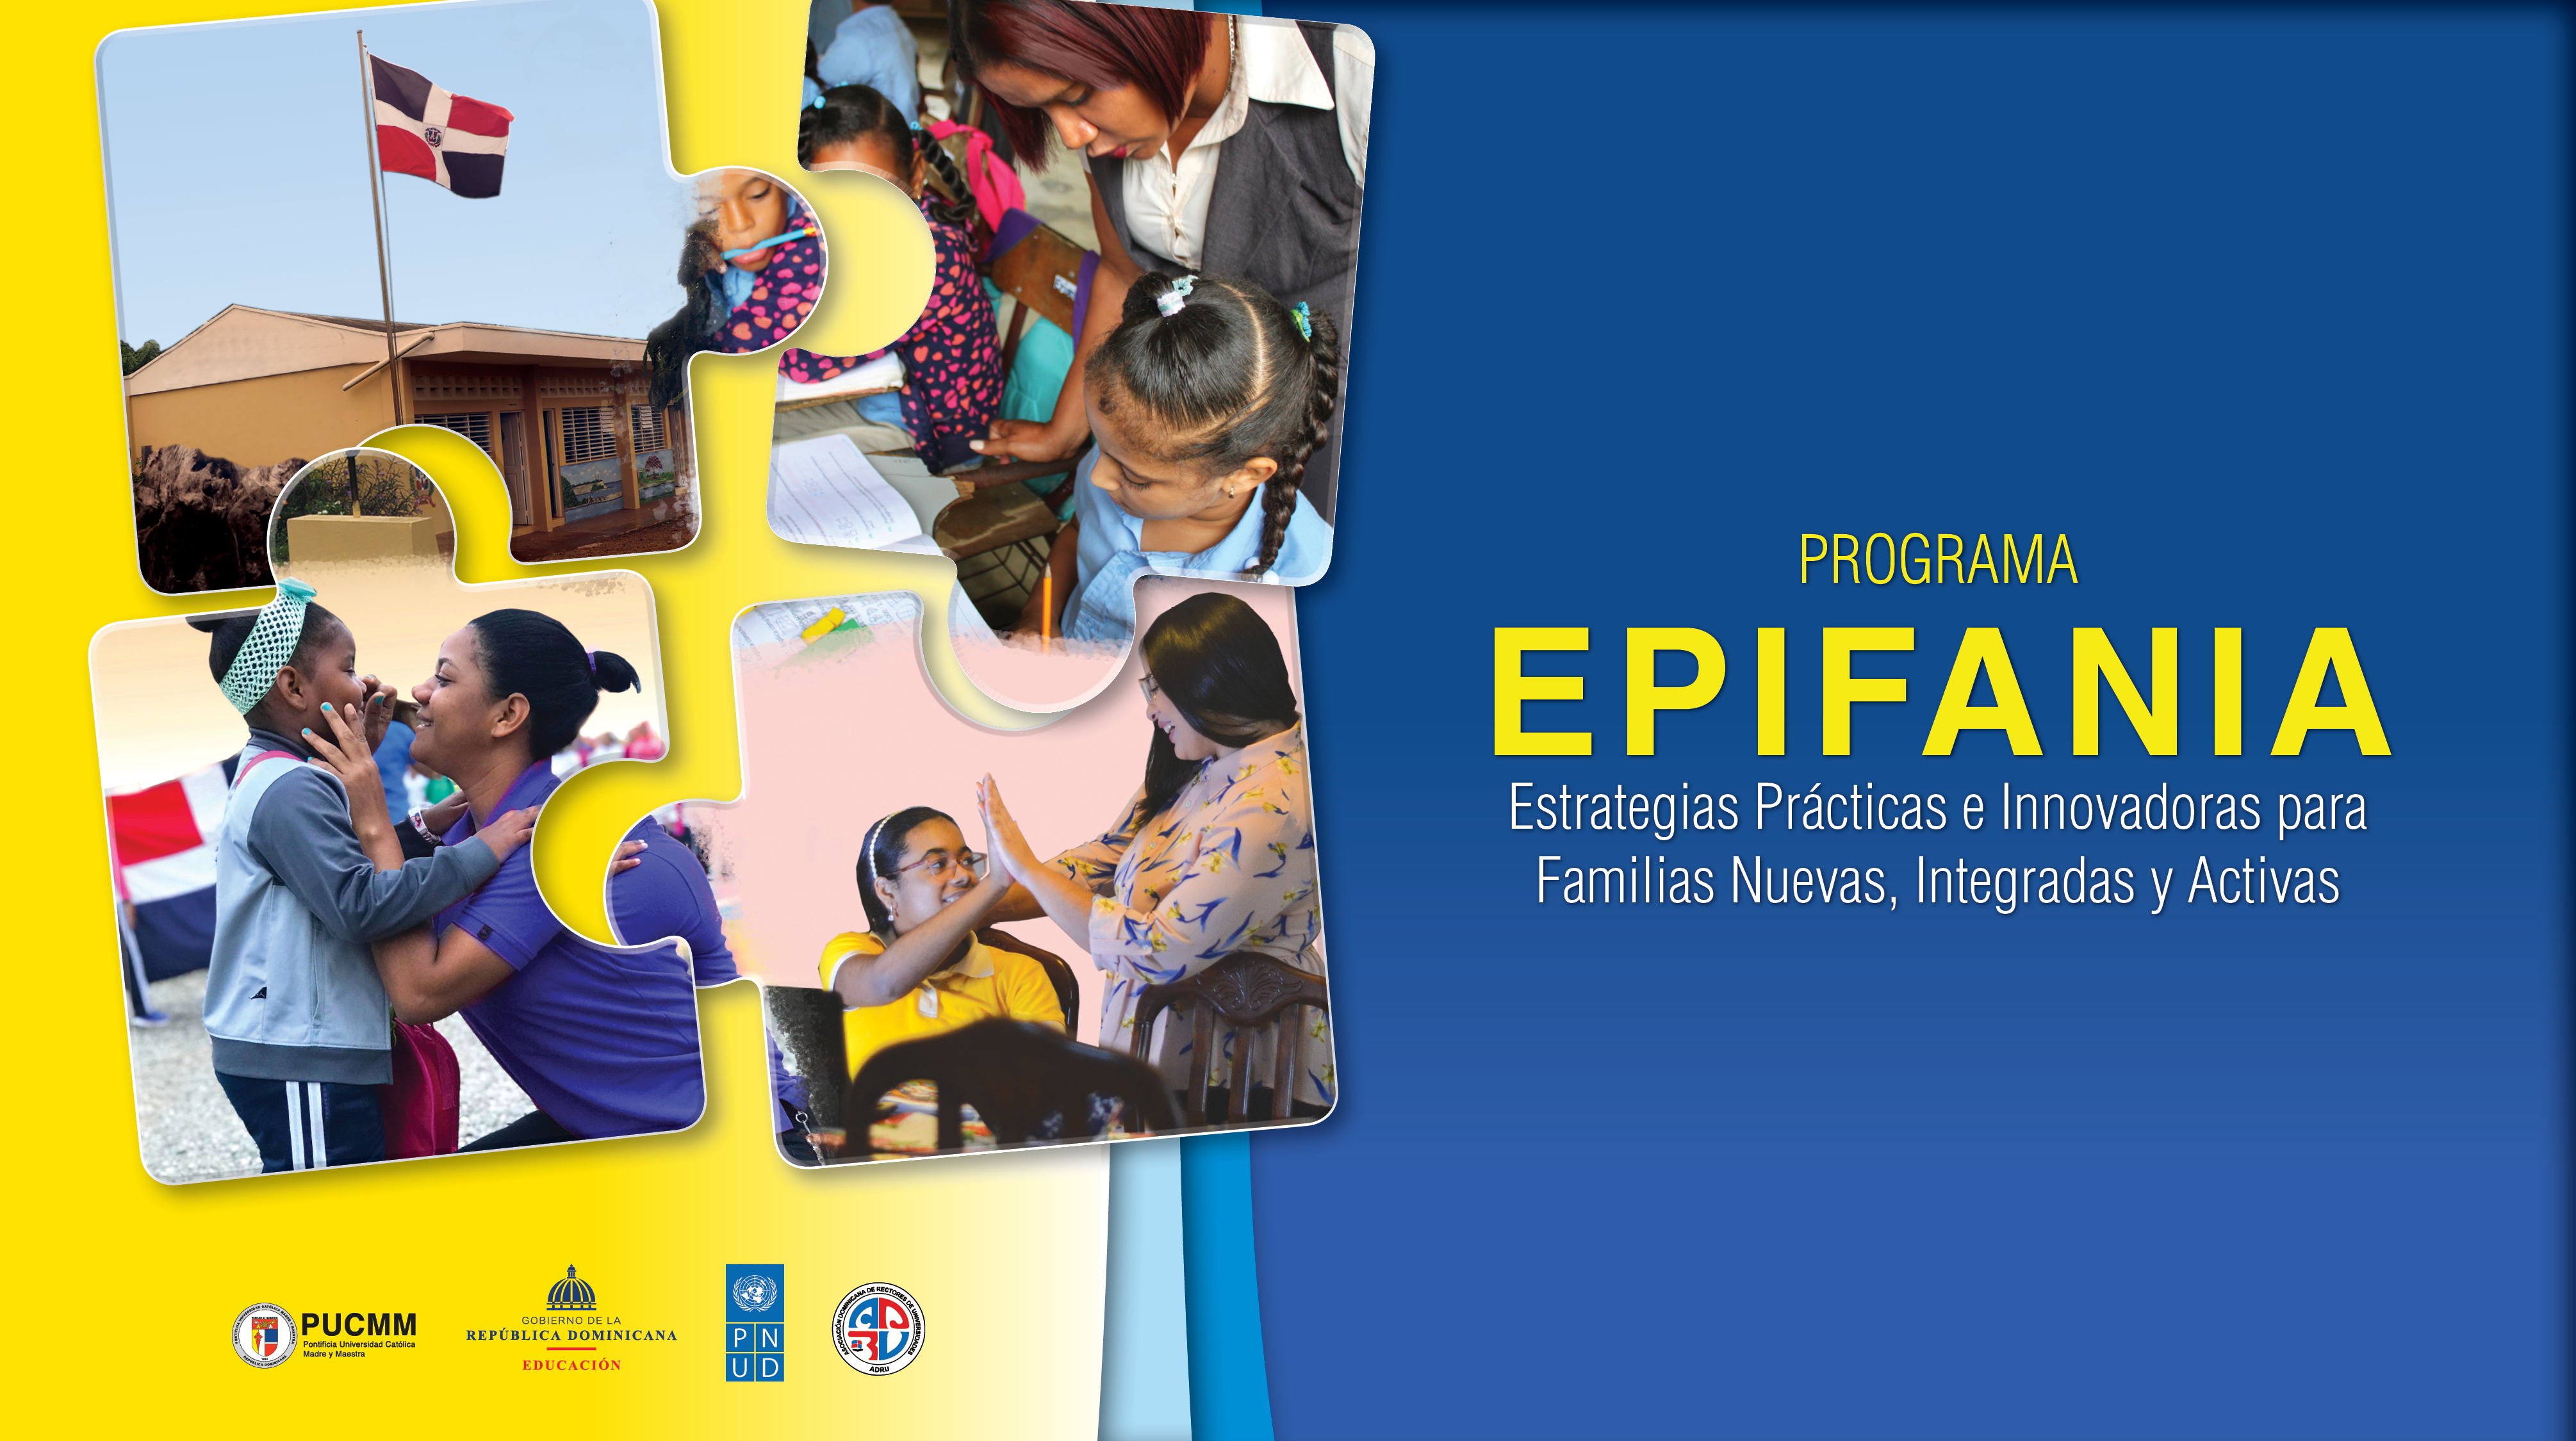 Proyecto Epifania Capacitara   240 mil padres, madres y tutores